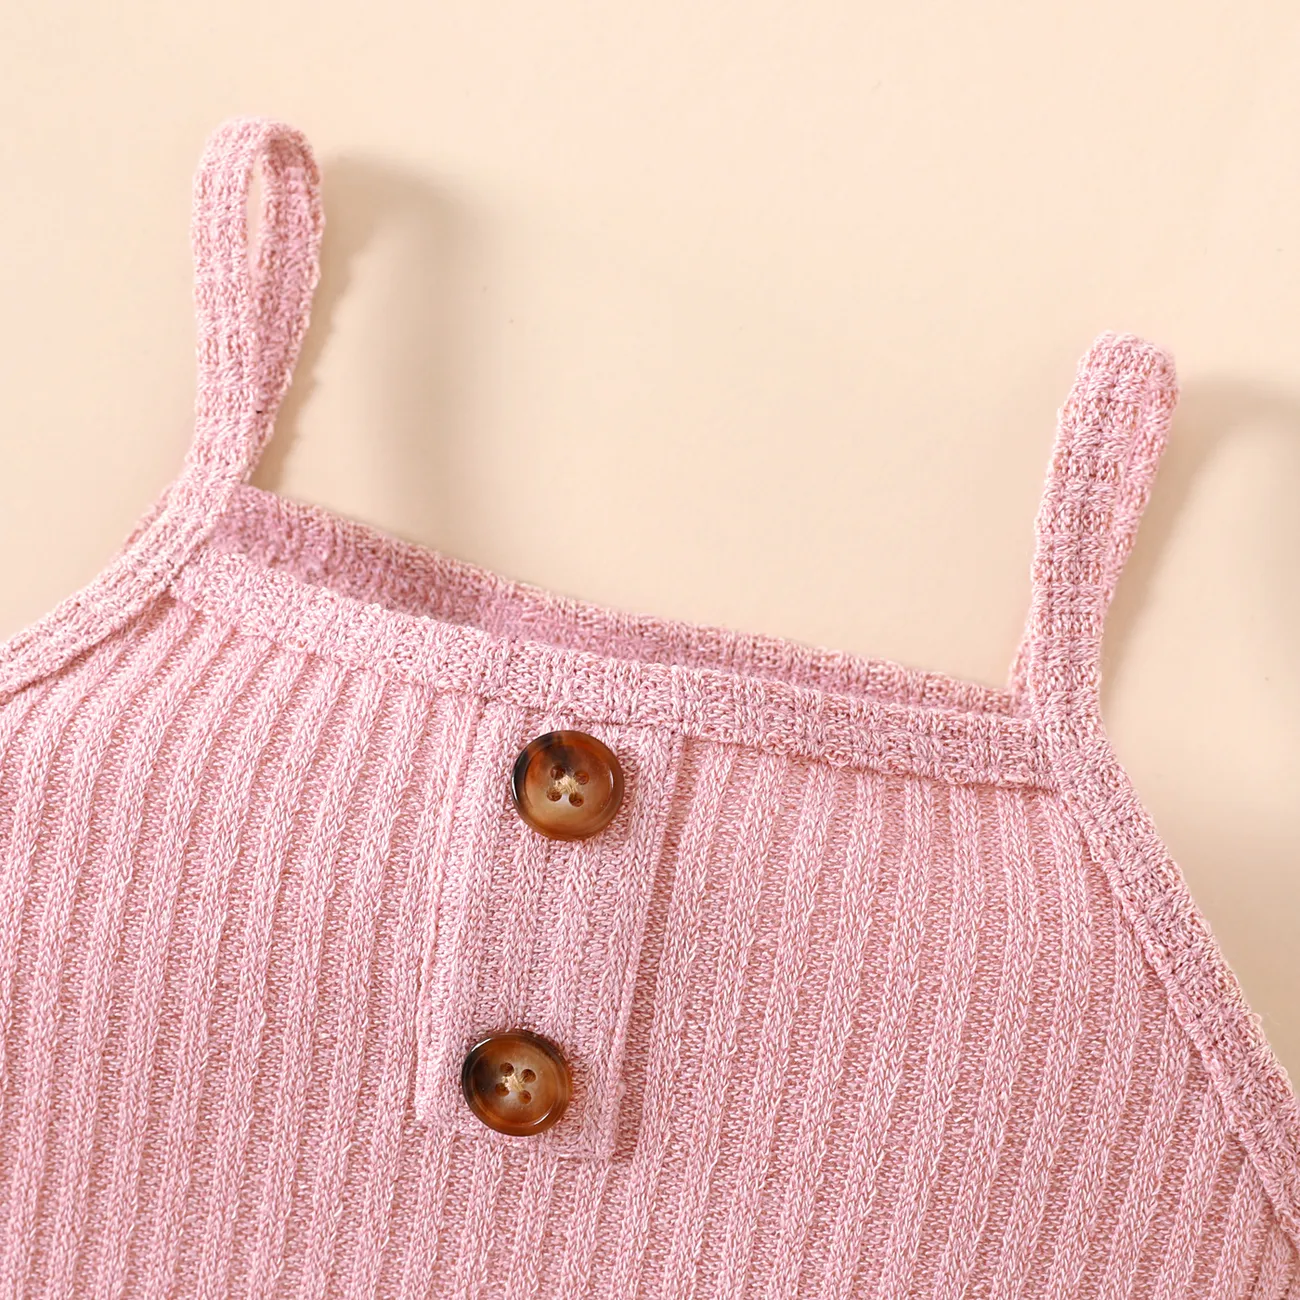 2pcs Toddler Girl Solid Ribbed Camisole and Shorts Set Pink big image 1